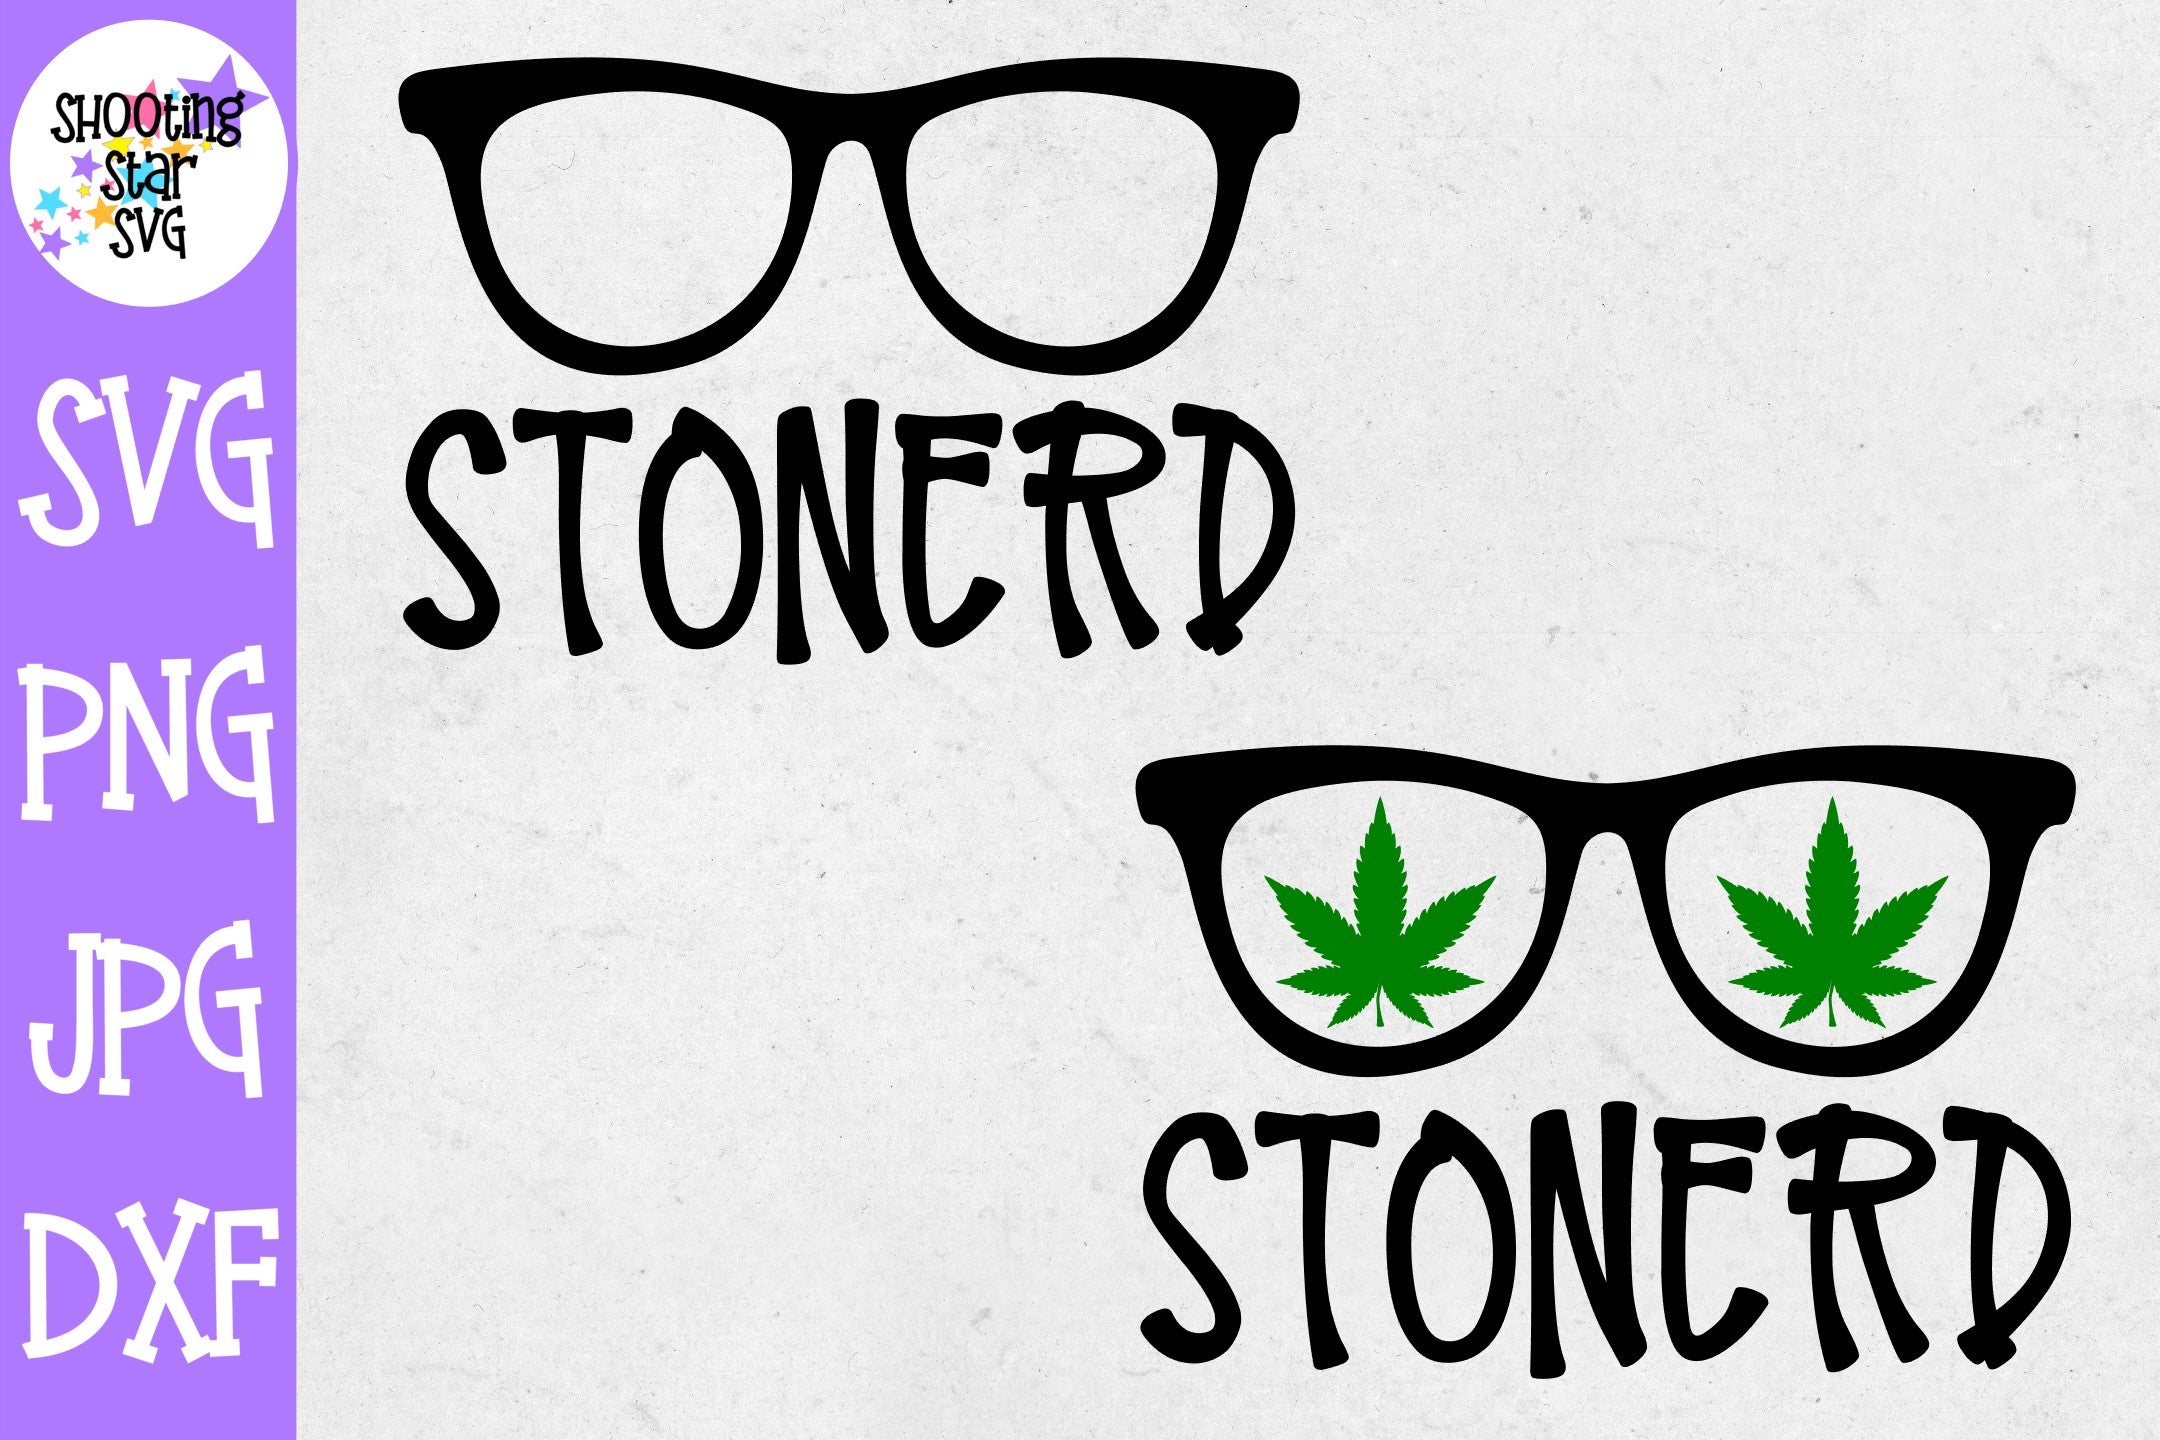 Stonerd svg - Nerd Stoner svg - Weed SVG - Marijuana SVG - Rolling Tray SVG